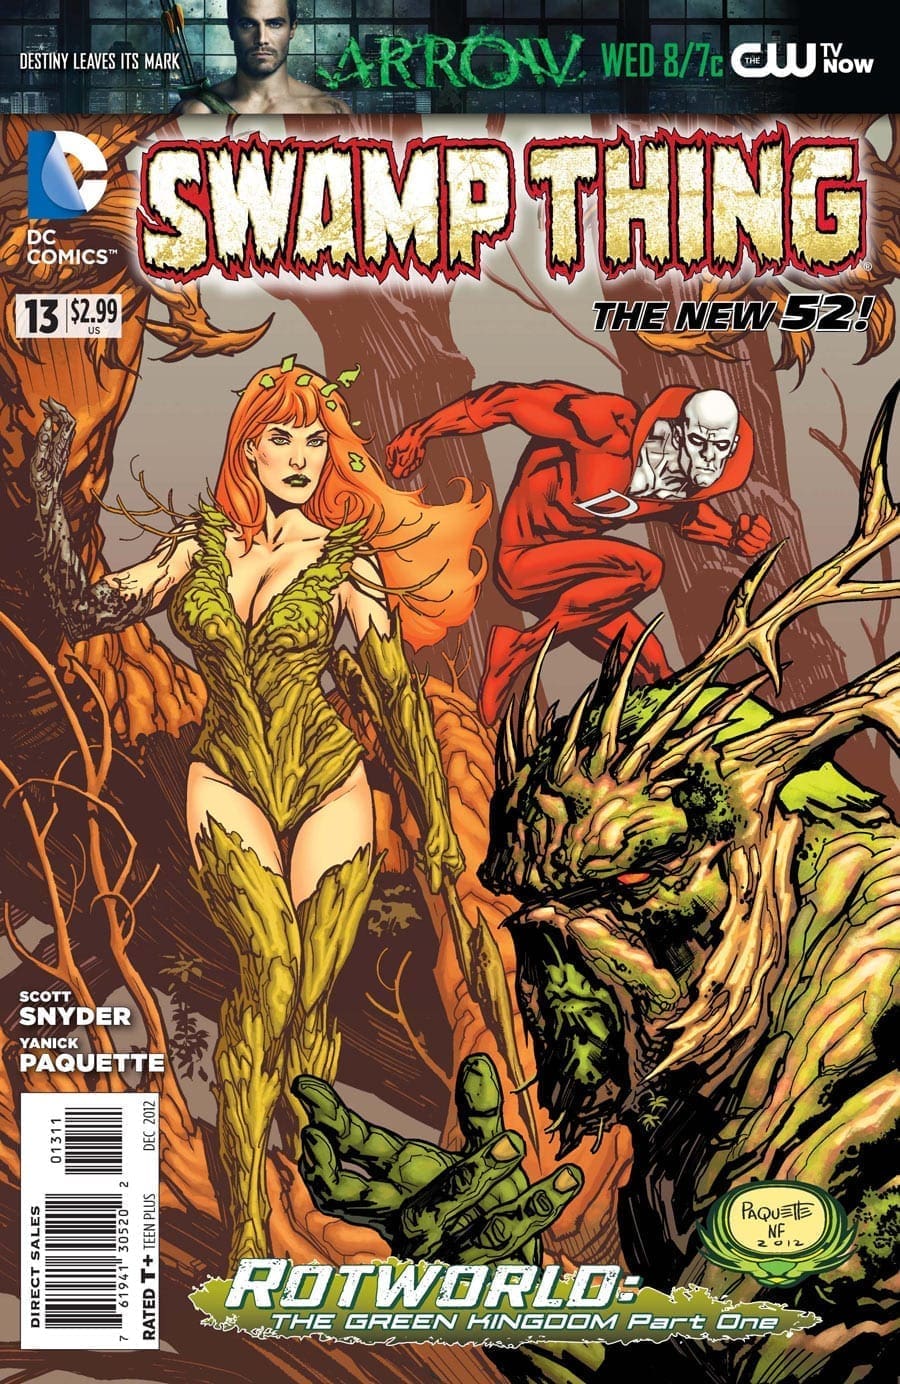 action comics, animal man, avengers vs xmen, batman, batwing, daredevil, detective comics, green lantern, planet of the apes, swamp thing